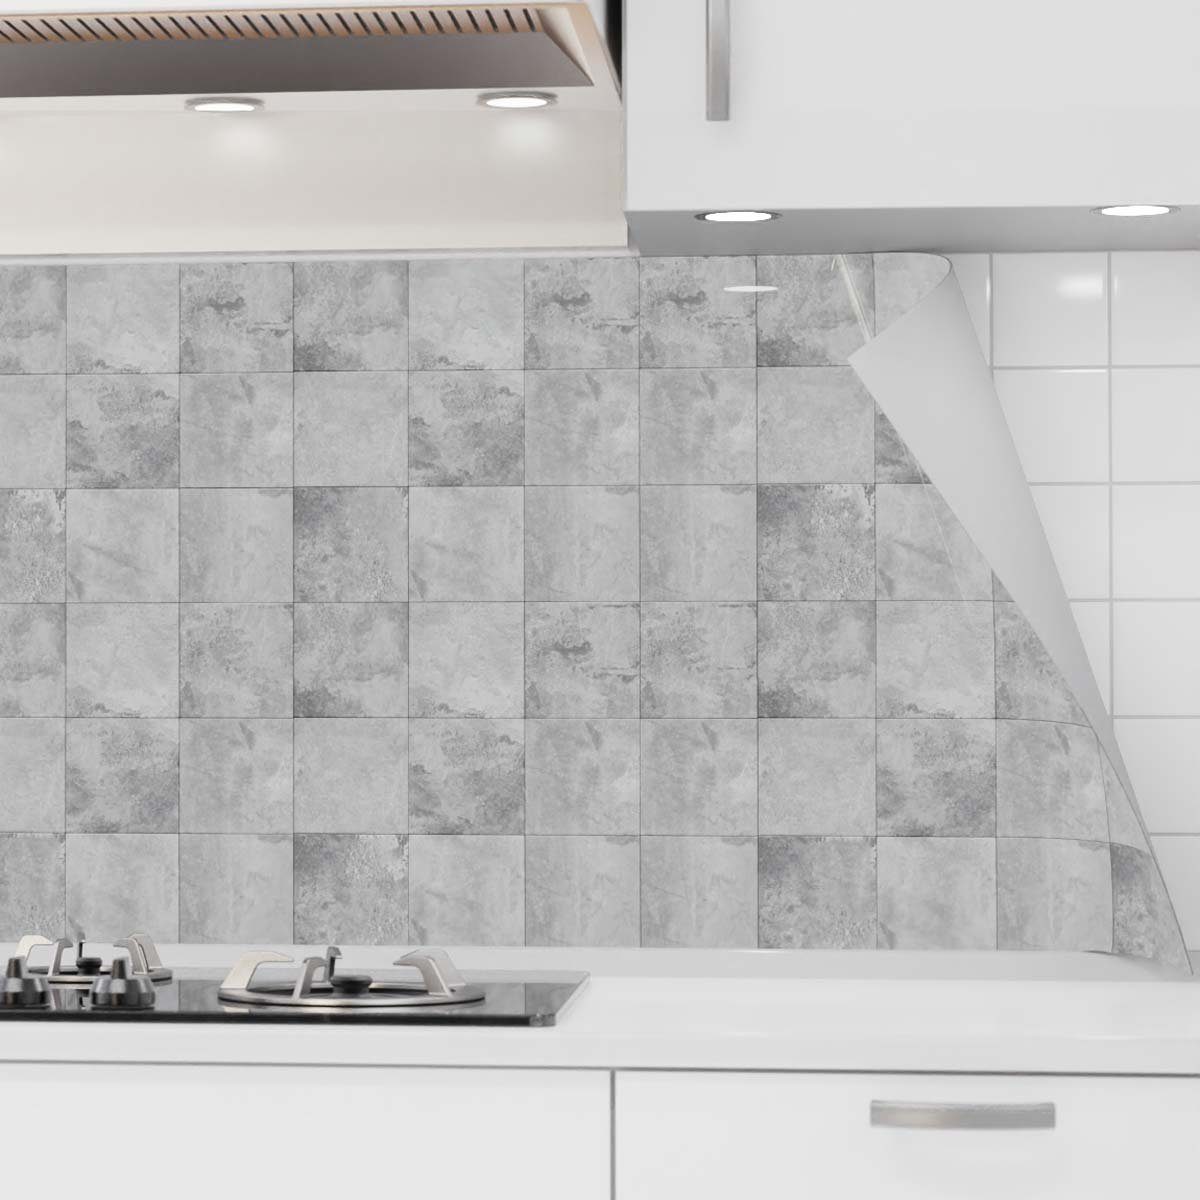 danario Küchenrückwand Folie Spritzschutz selbstklebend - versteifte grau PET Küche Keramikfliesen - - Matt